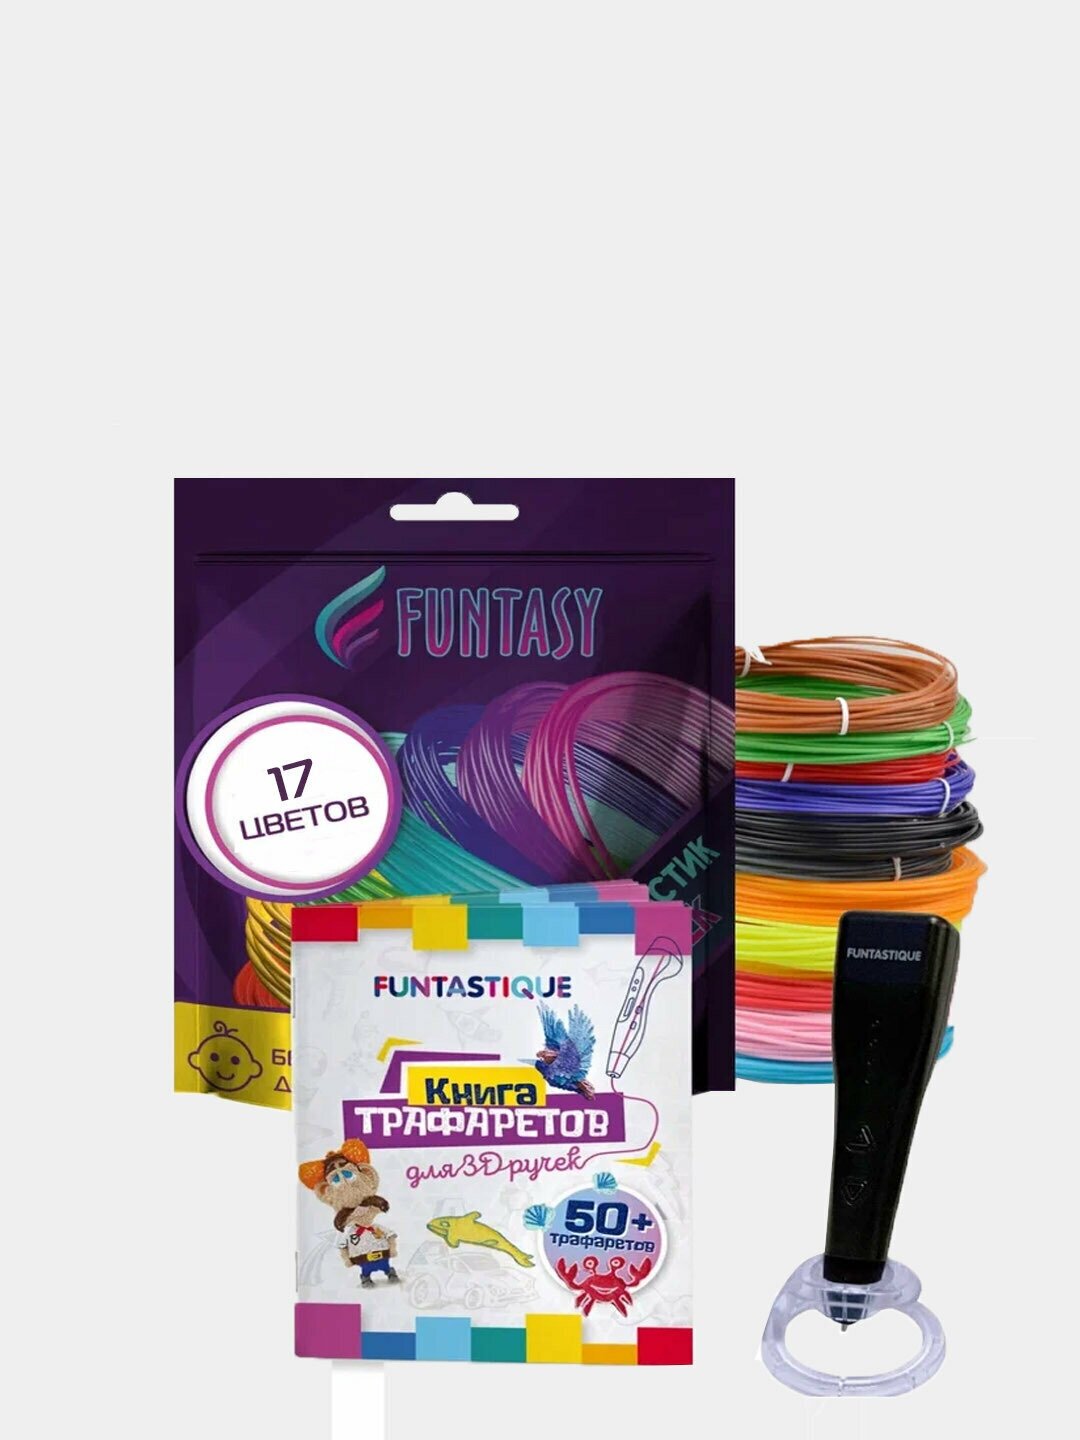 Набор для 3Д творчества 4в1 FUNTASY 3D-ручка PICCOLO (Черная)+ PLA 17 цветов + Трафарет  картриджи  стержни  триде  подарок для ребенка